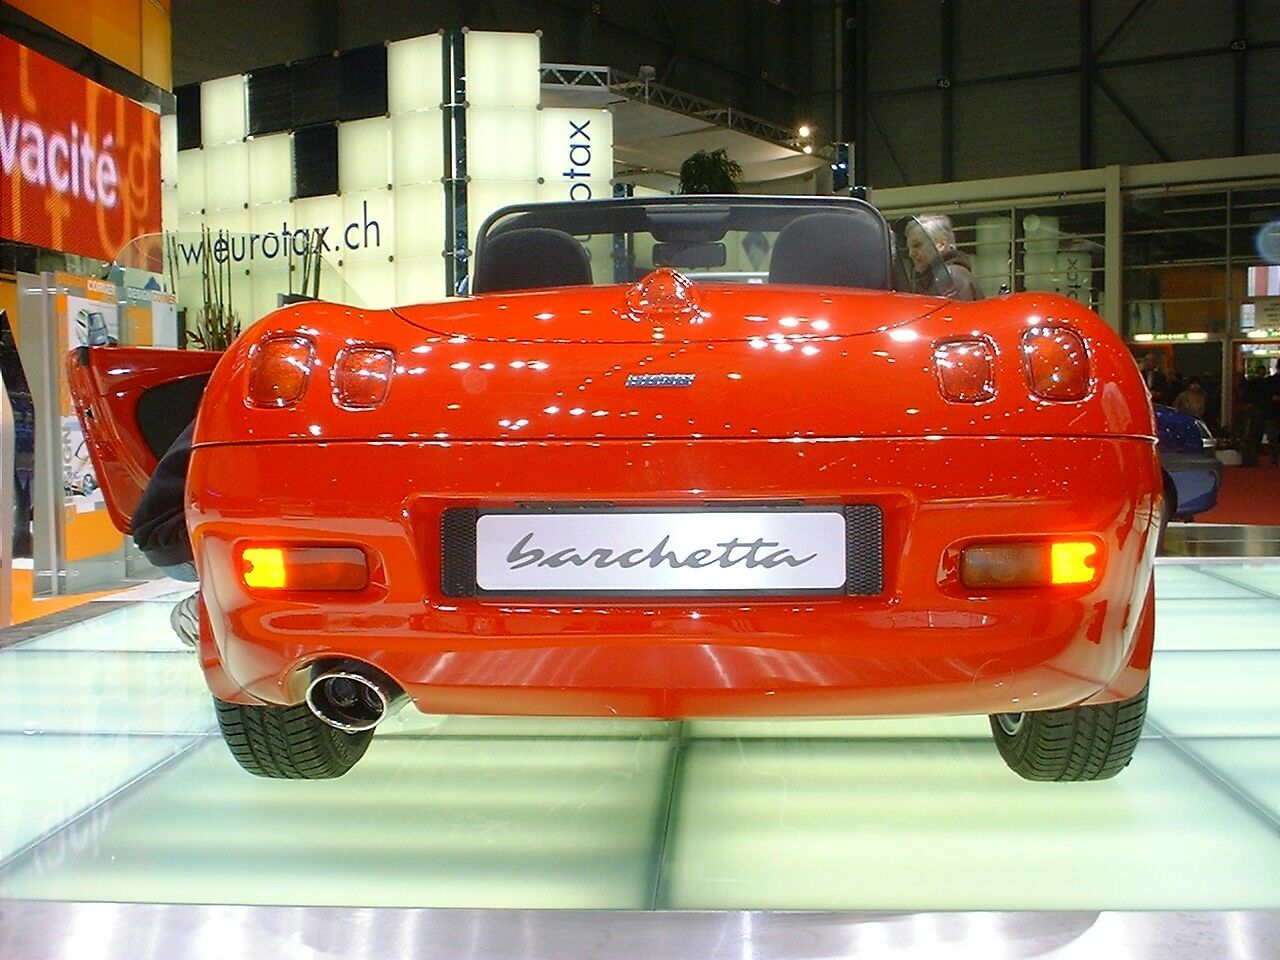 Fiat Barchetta